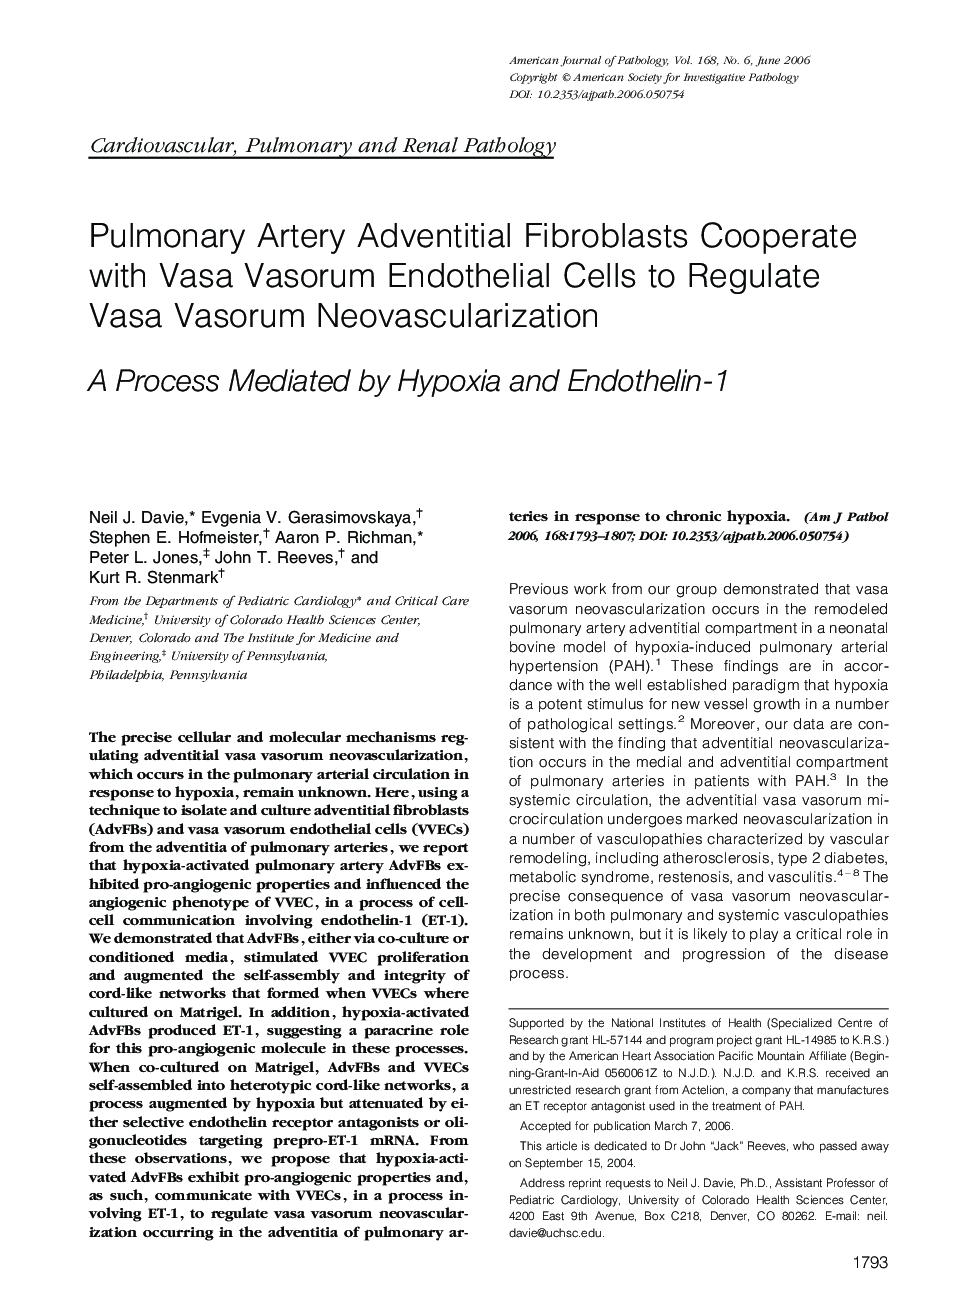 Pulmonary Artery Adventitial Fibroblasts Cooperate with Vasa Vasorum Endothelial Cells to Regulate Vasa Vasorum Neovascularization : A Process Mediated by Hypoxia and Endothelin-1